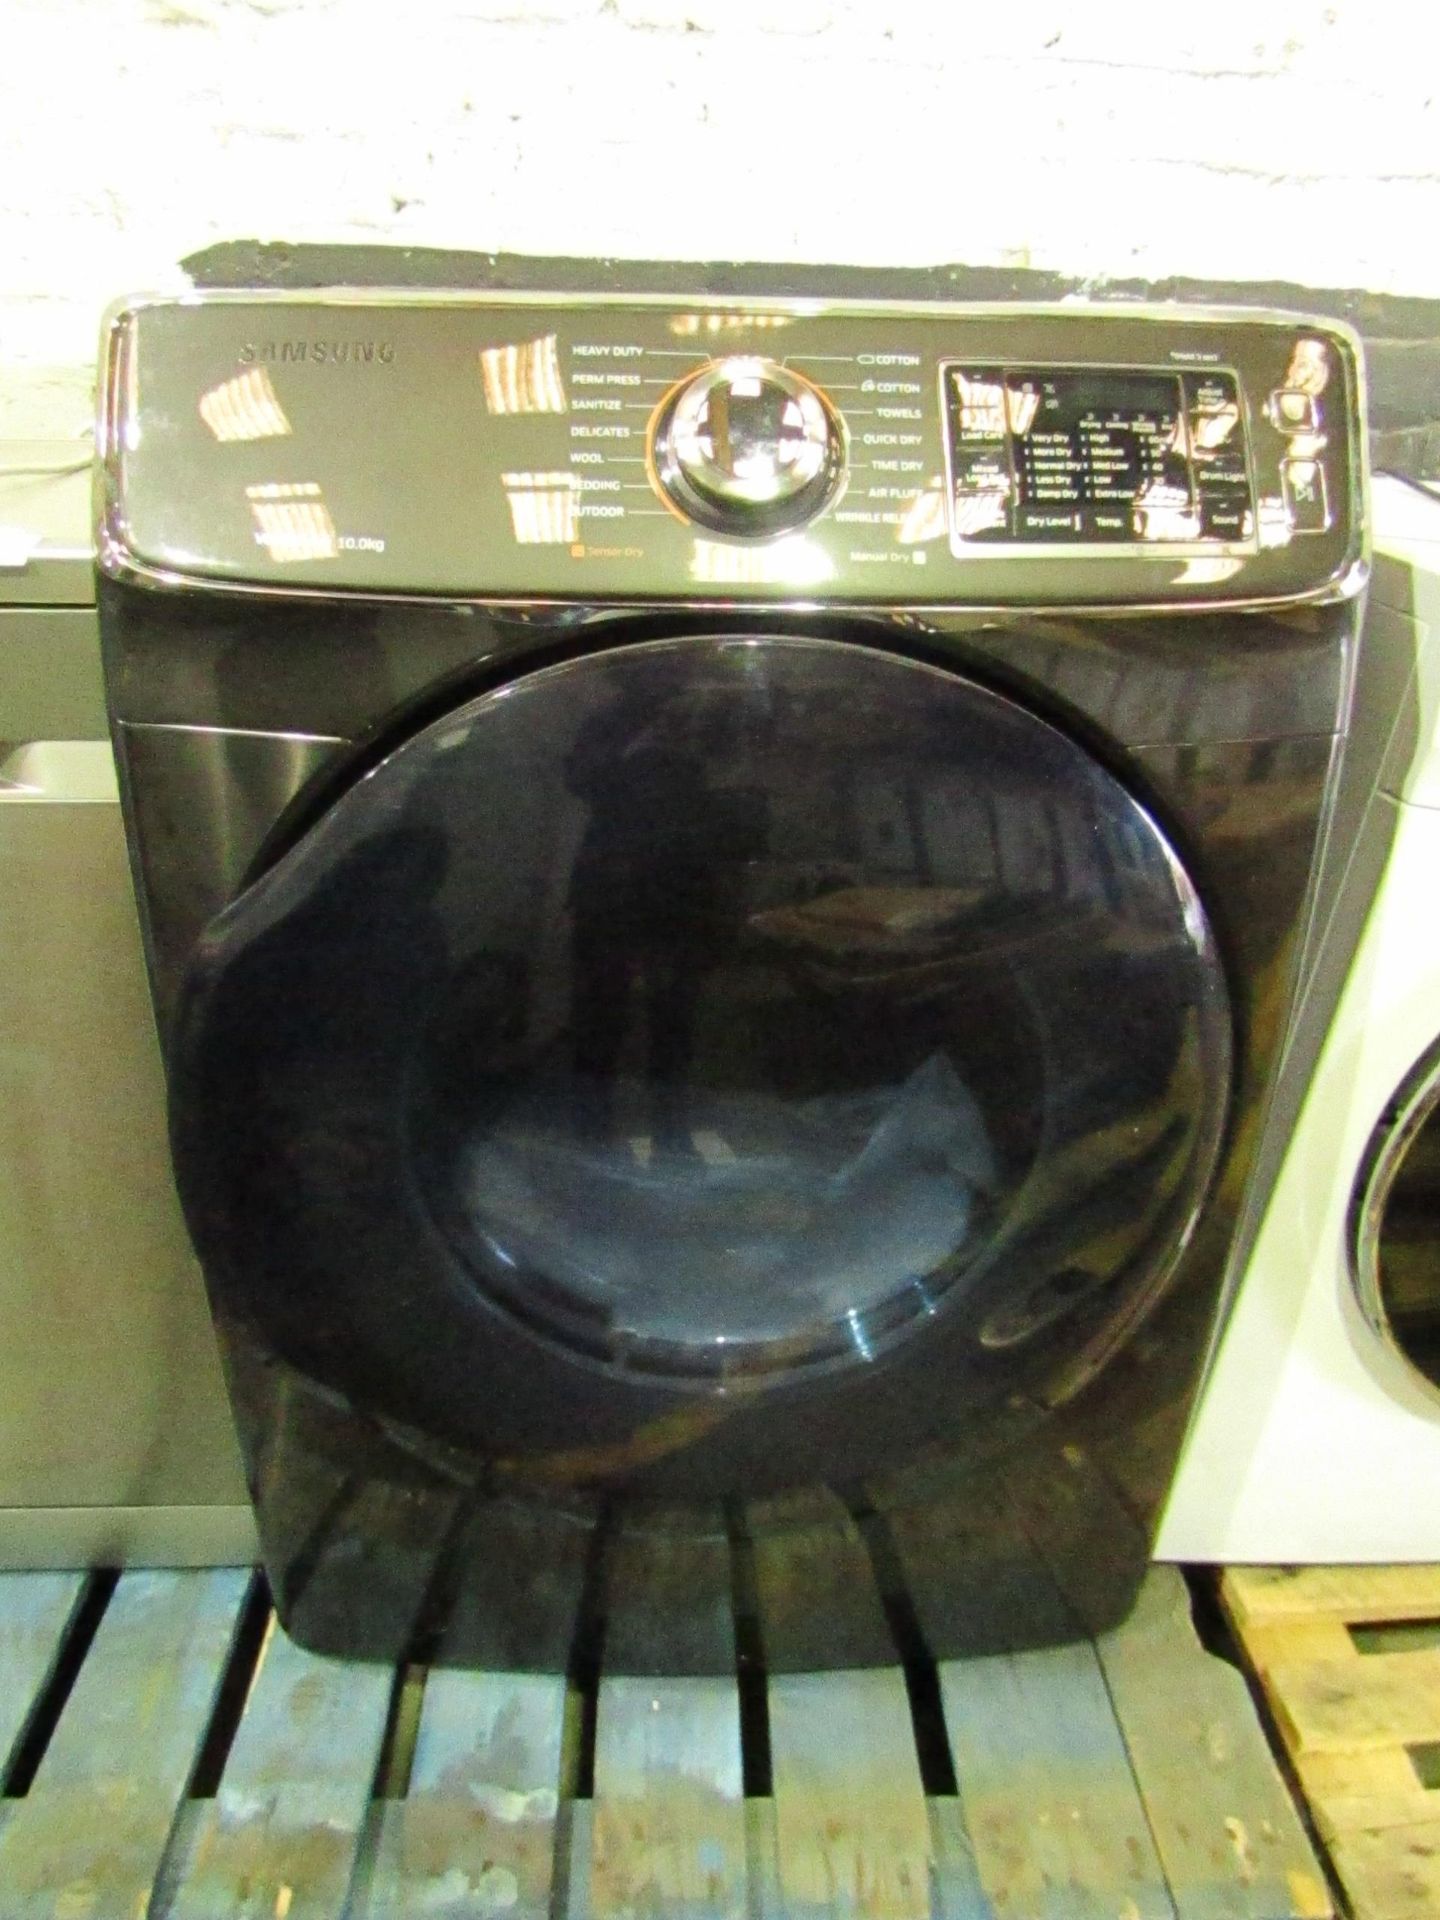 Samsung - Ventsensor 10kg Dryer - Untested due to no plug.